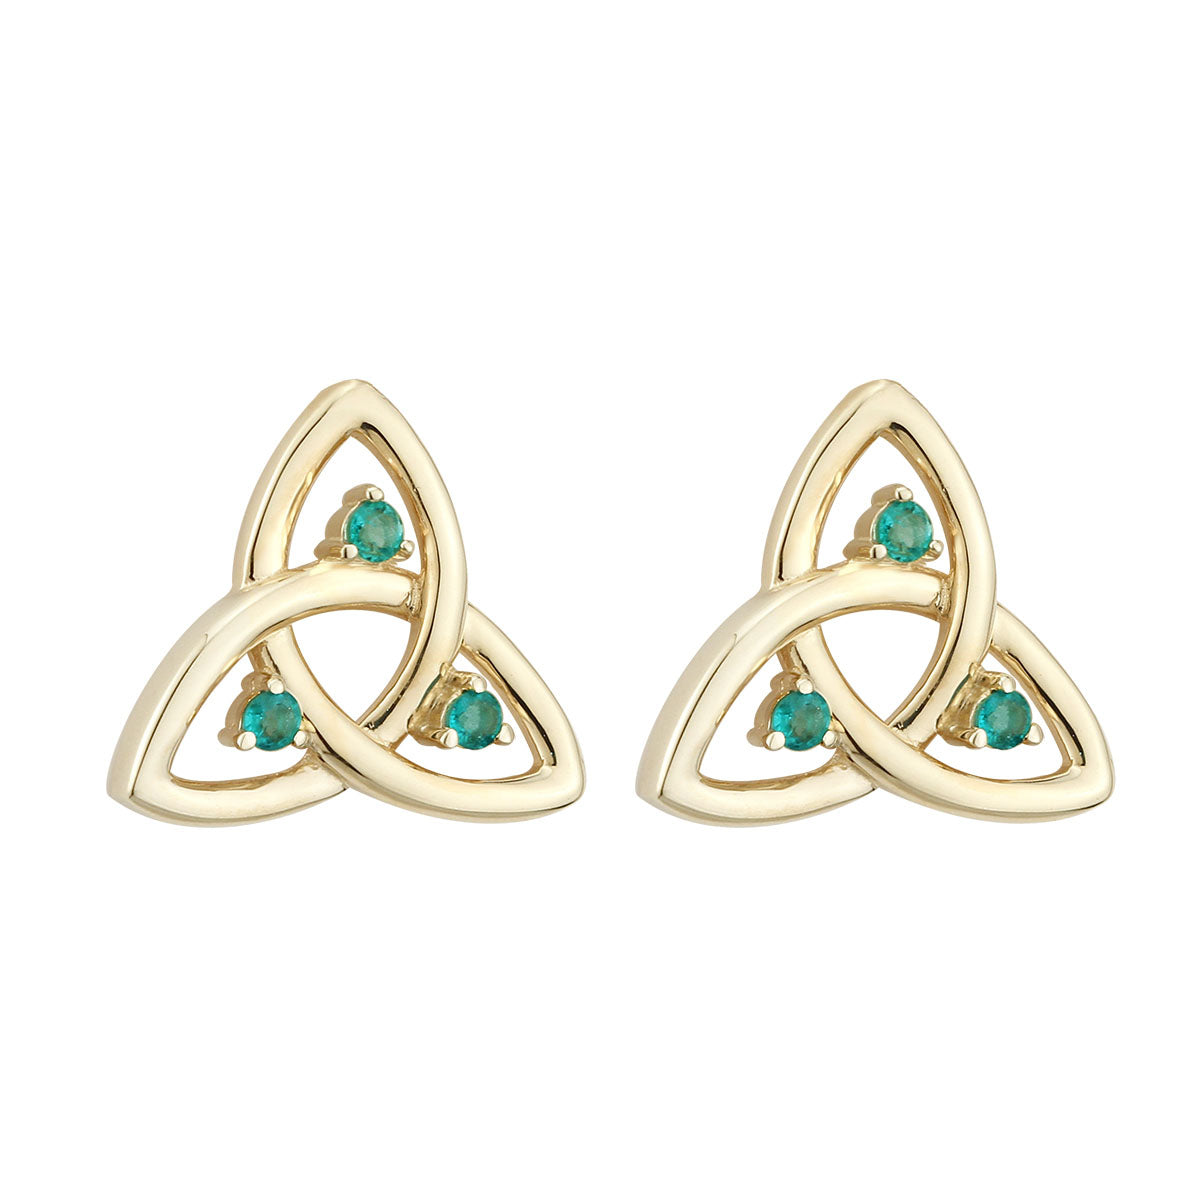 14K gold emerald trinity knot stud earrings s33499 from Solvar